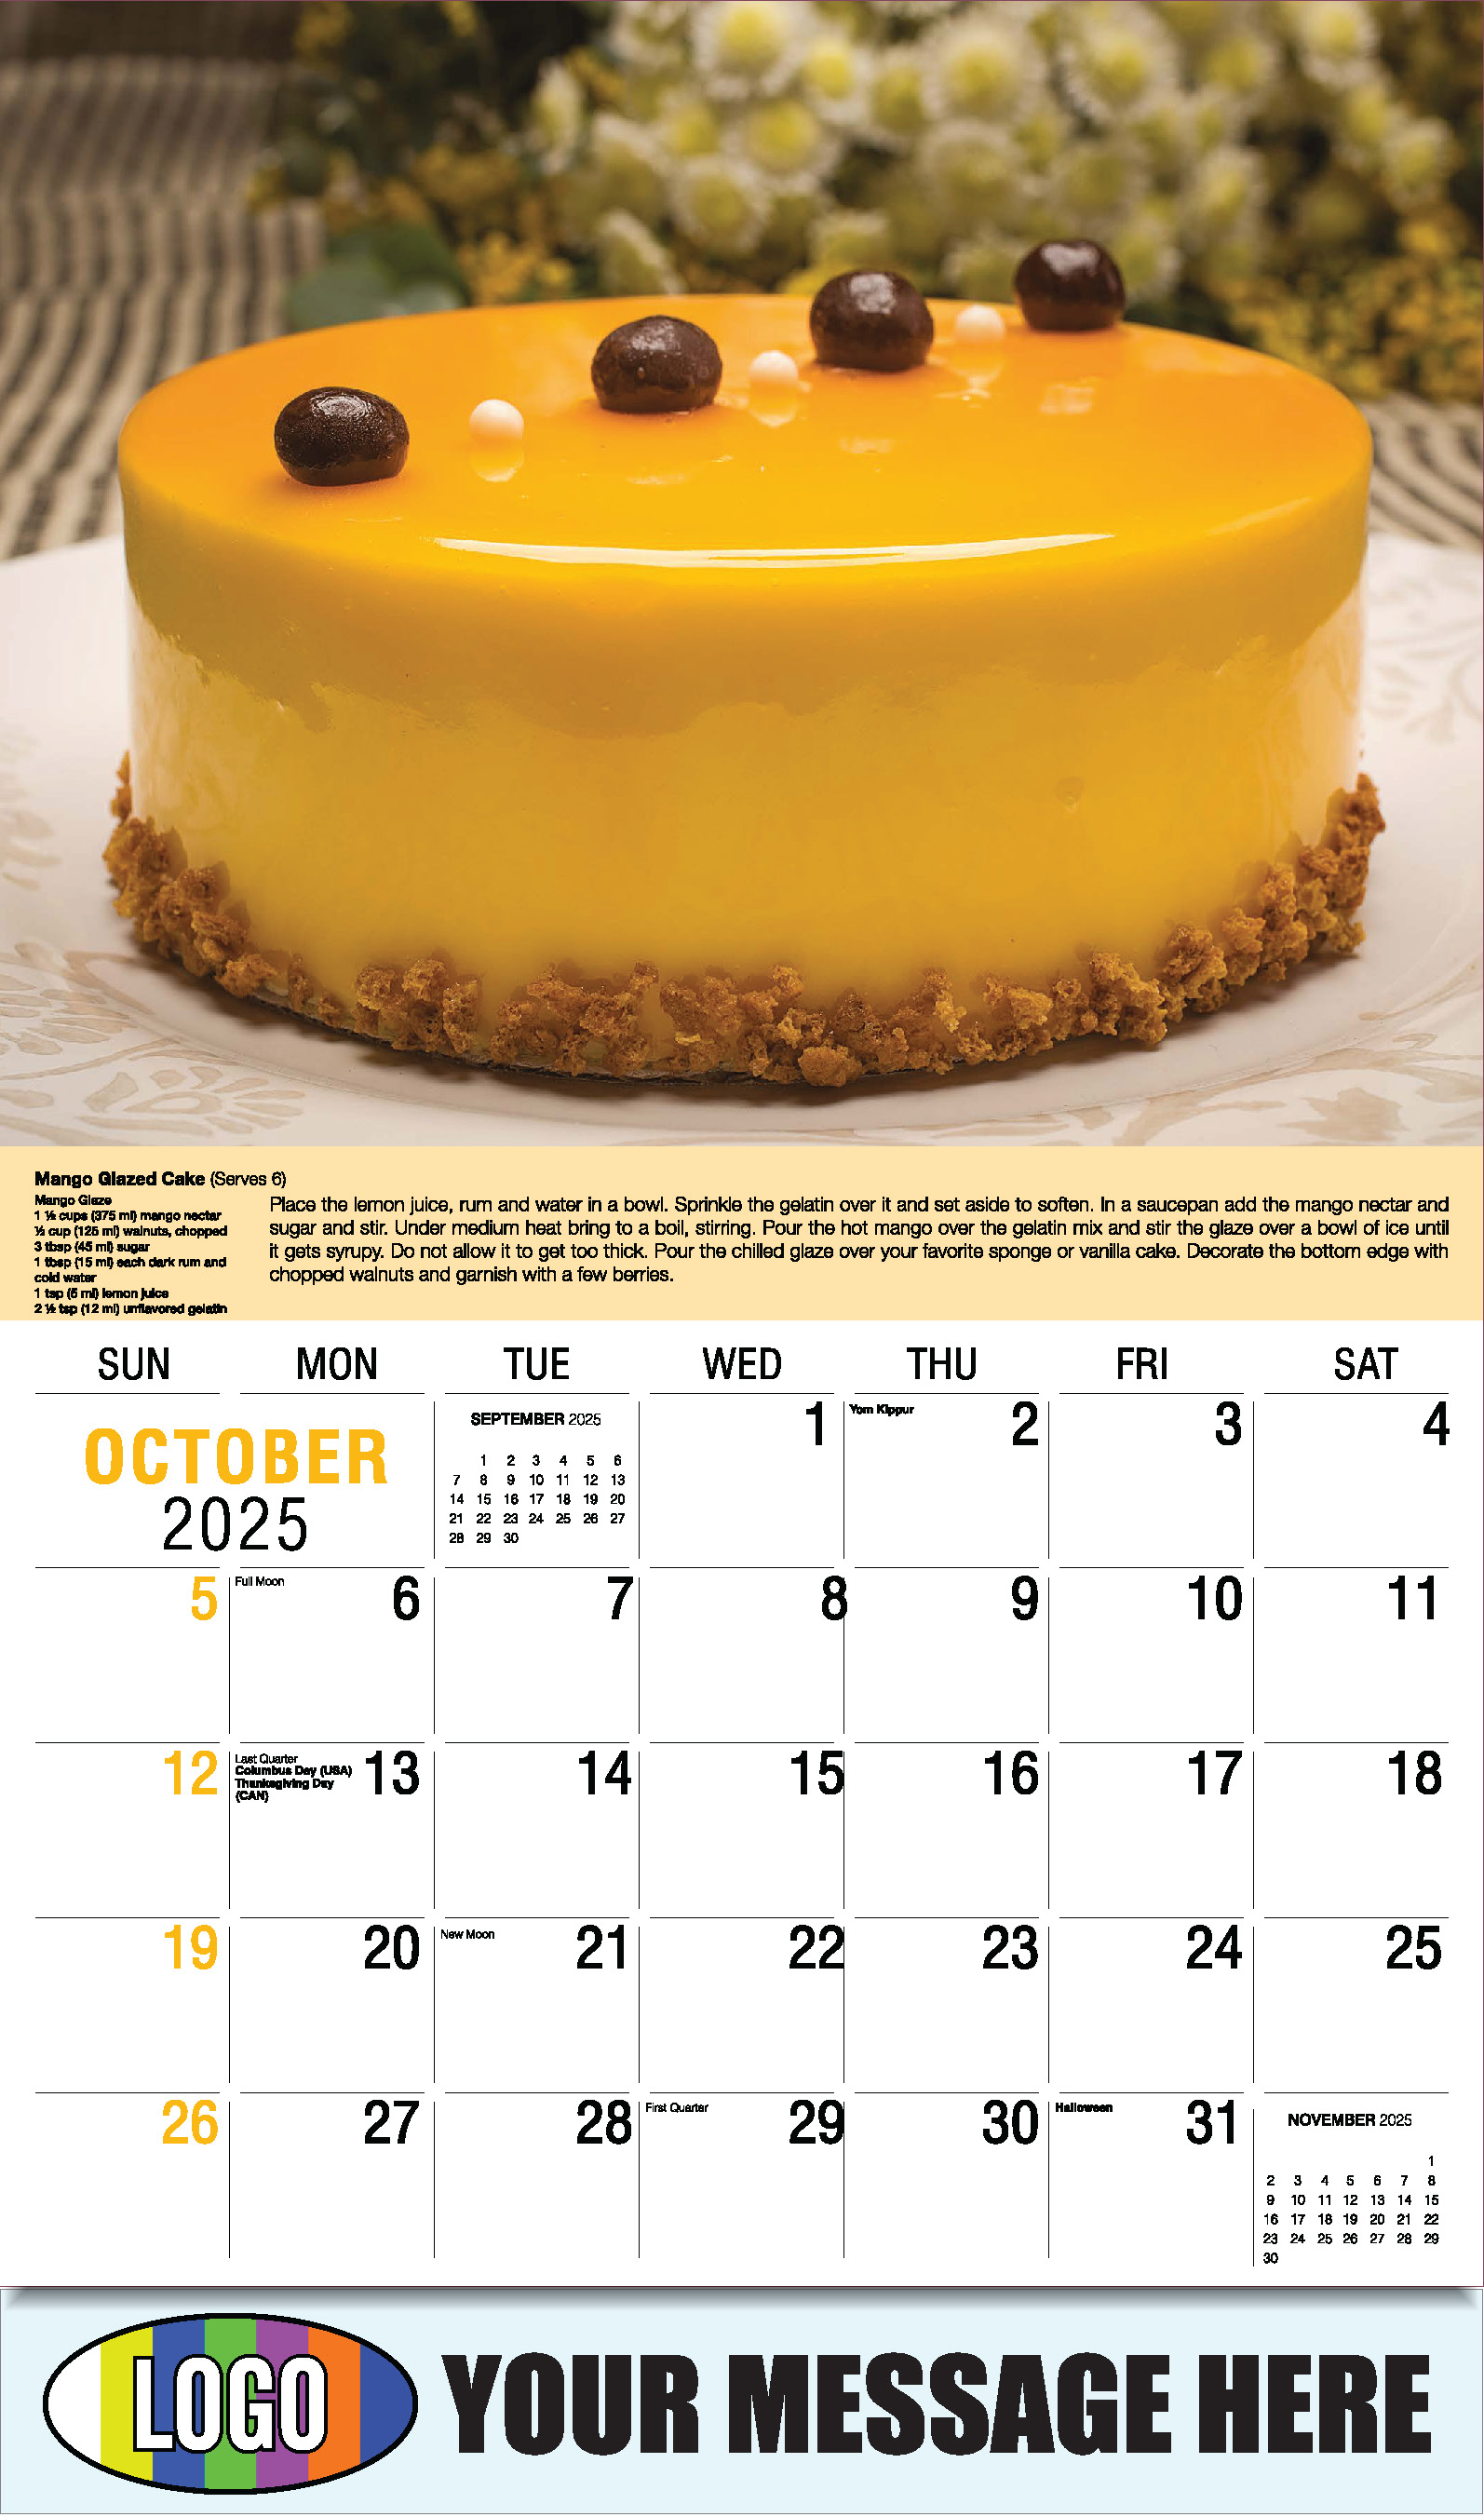 Recipes 2025 Business Promotional Calendar - October